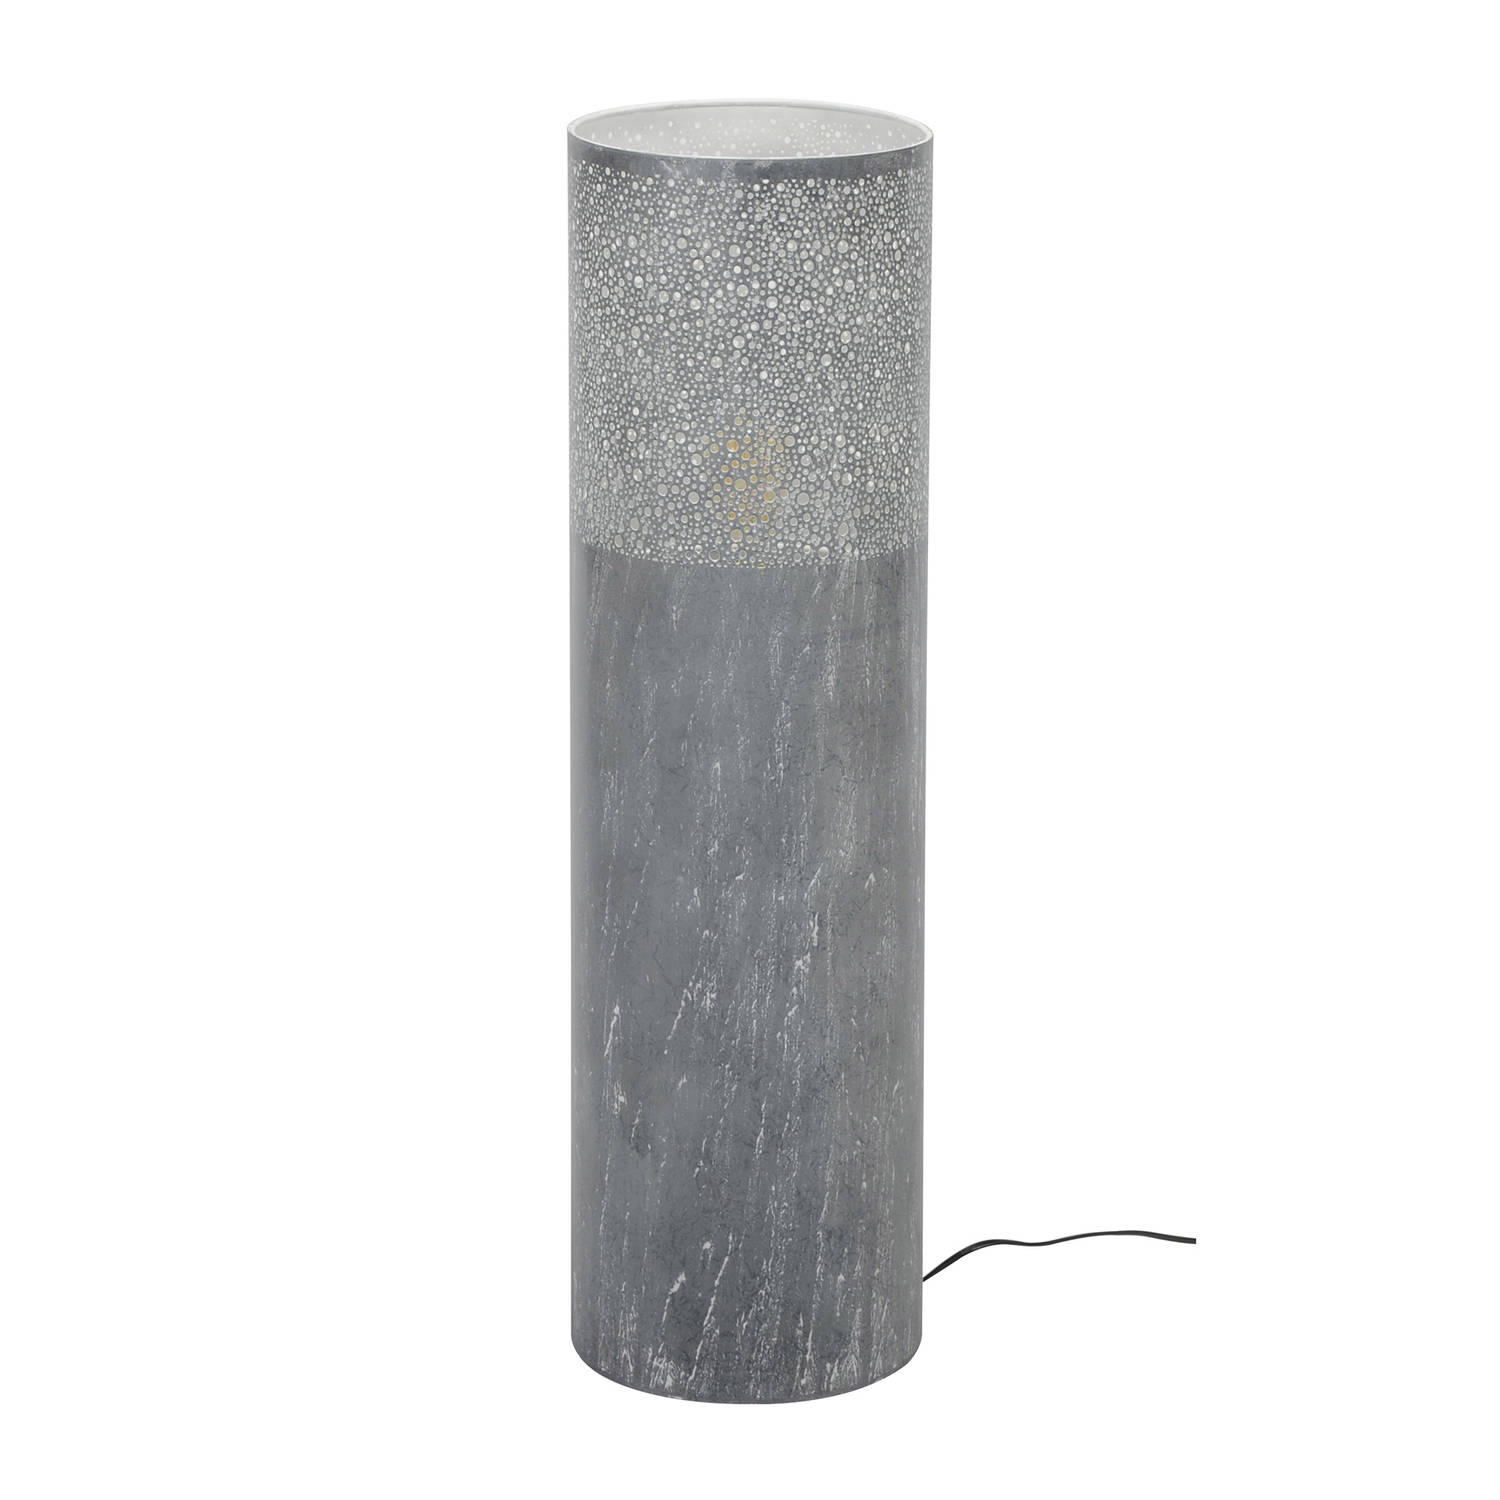 Giga Meubel Gm Vloerlamp Cilinder - Metaal - Betonlook - Ø25xh90cm